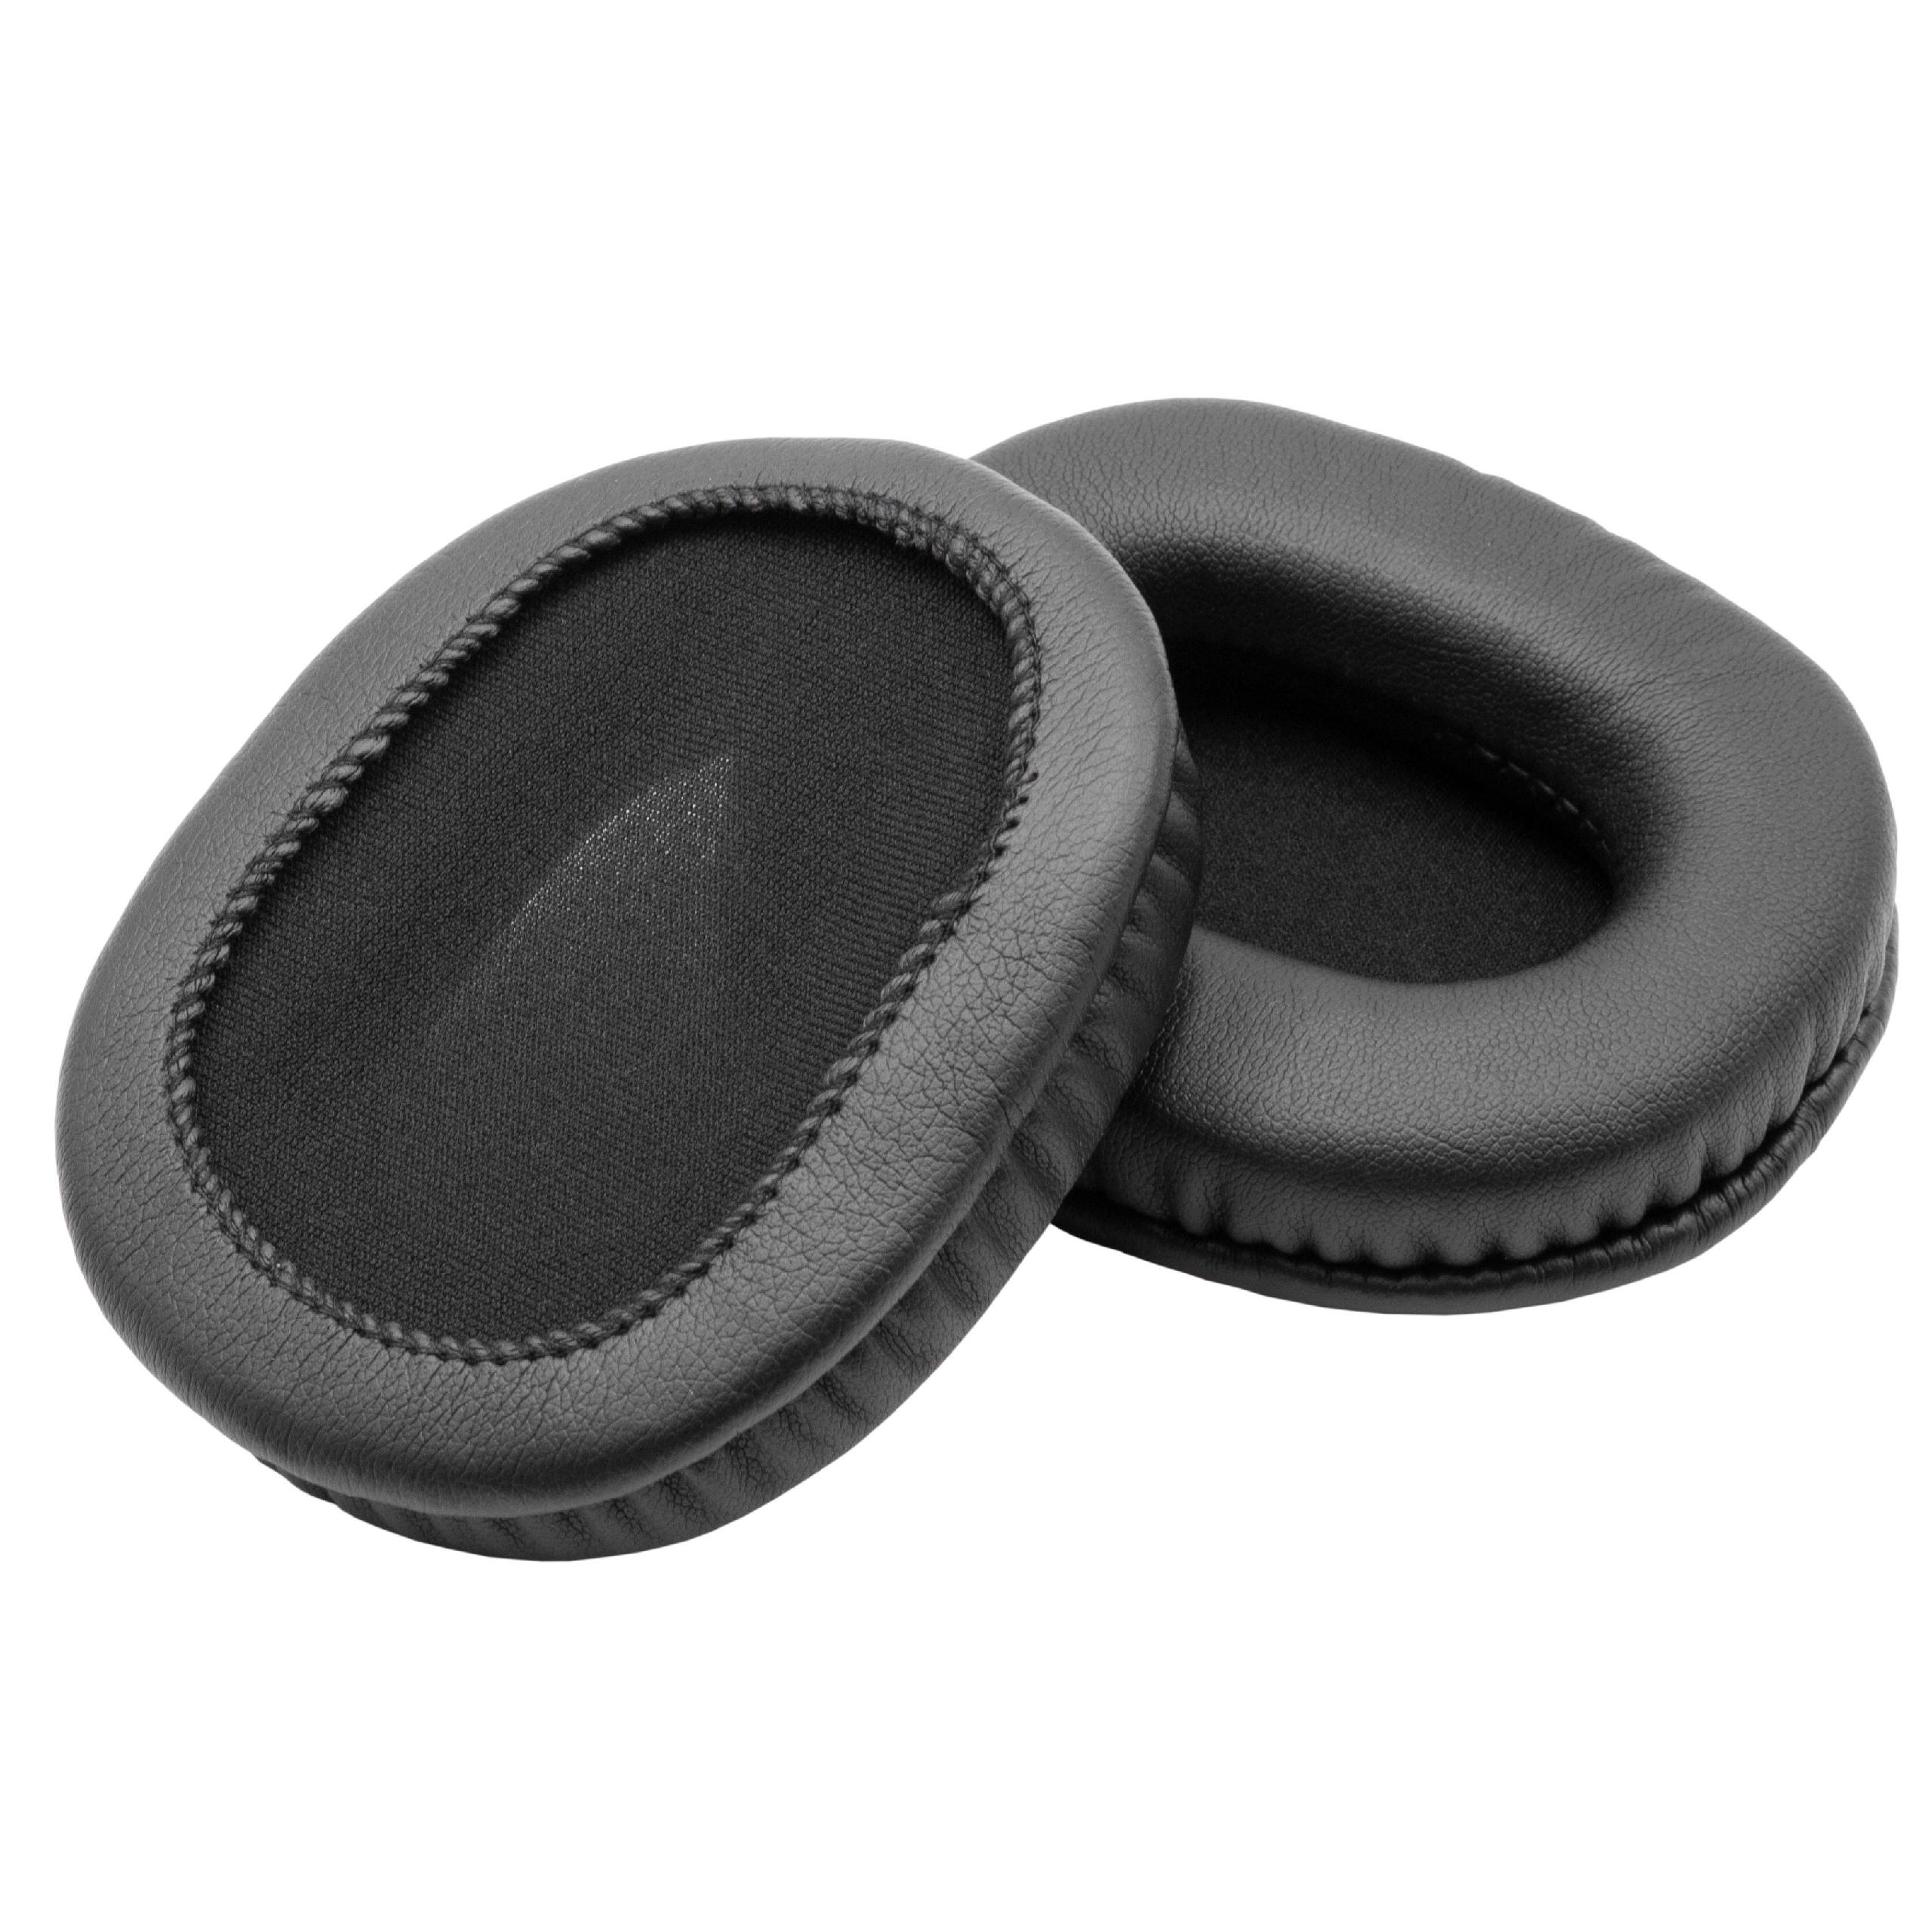 Ear Pads suitable for Audio Technica ATH-M20 Headphones etc. - polyurethane / foam, 11 mm thick